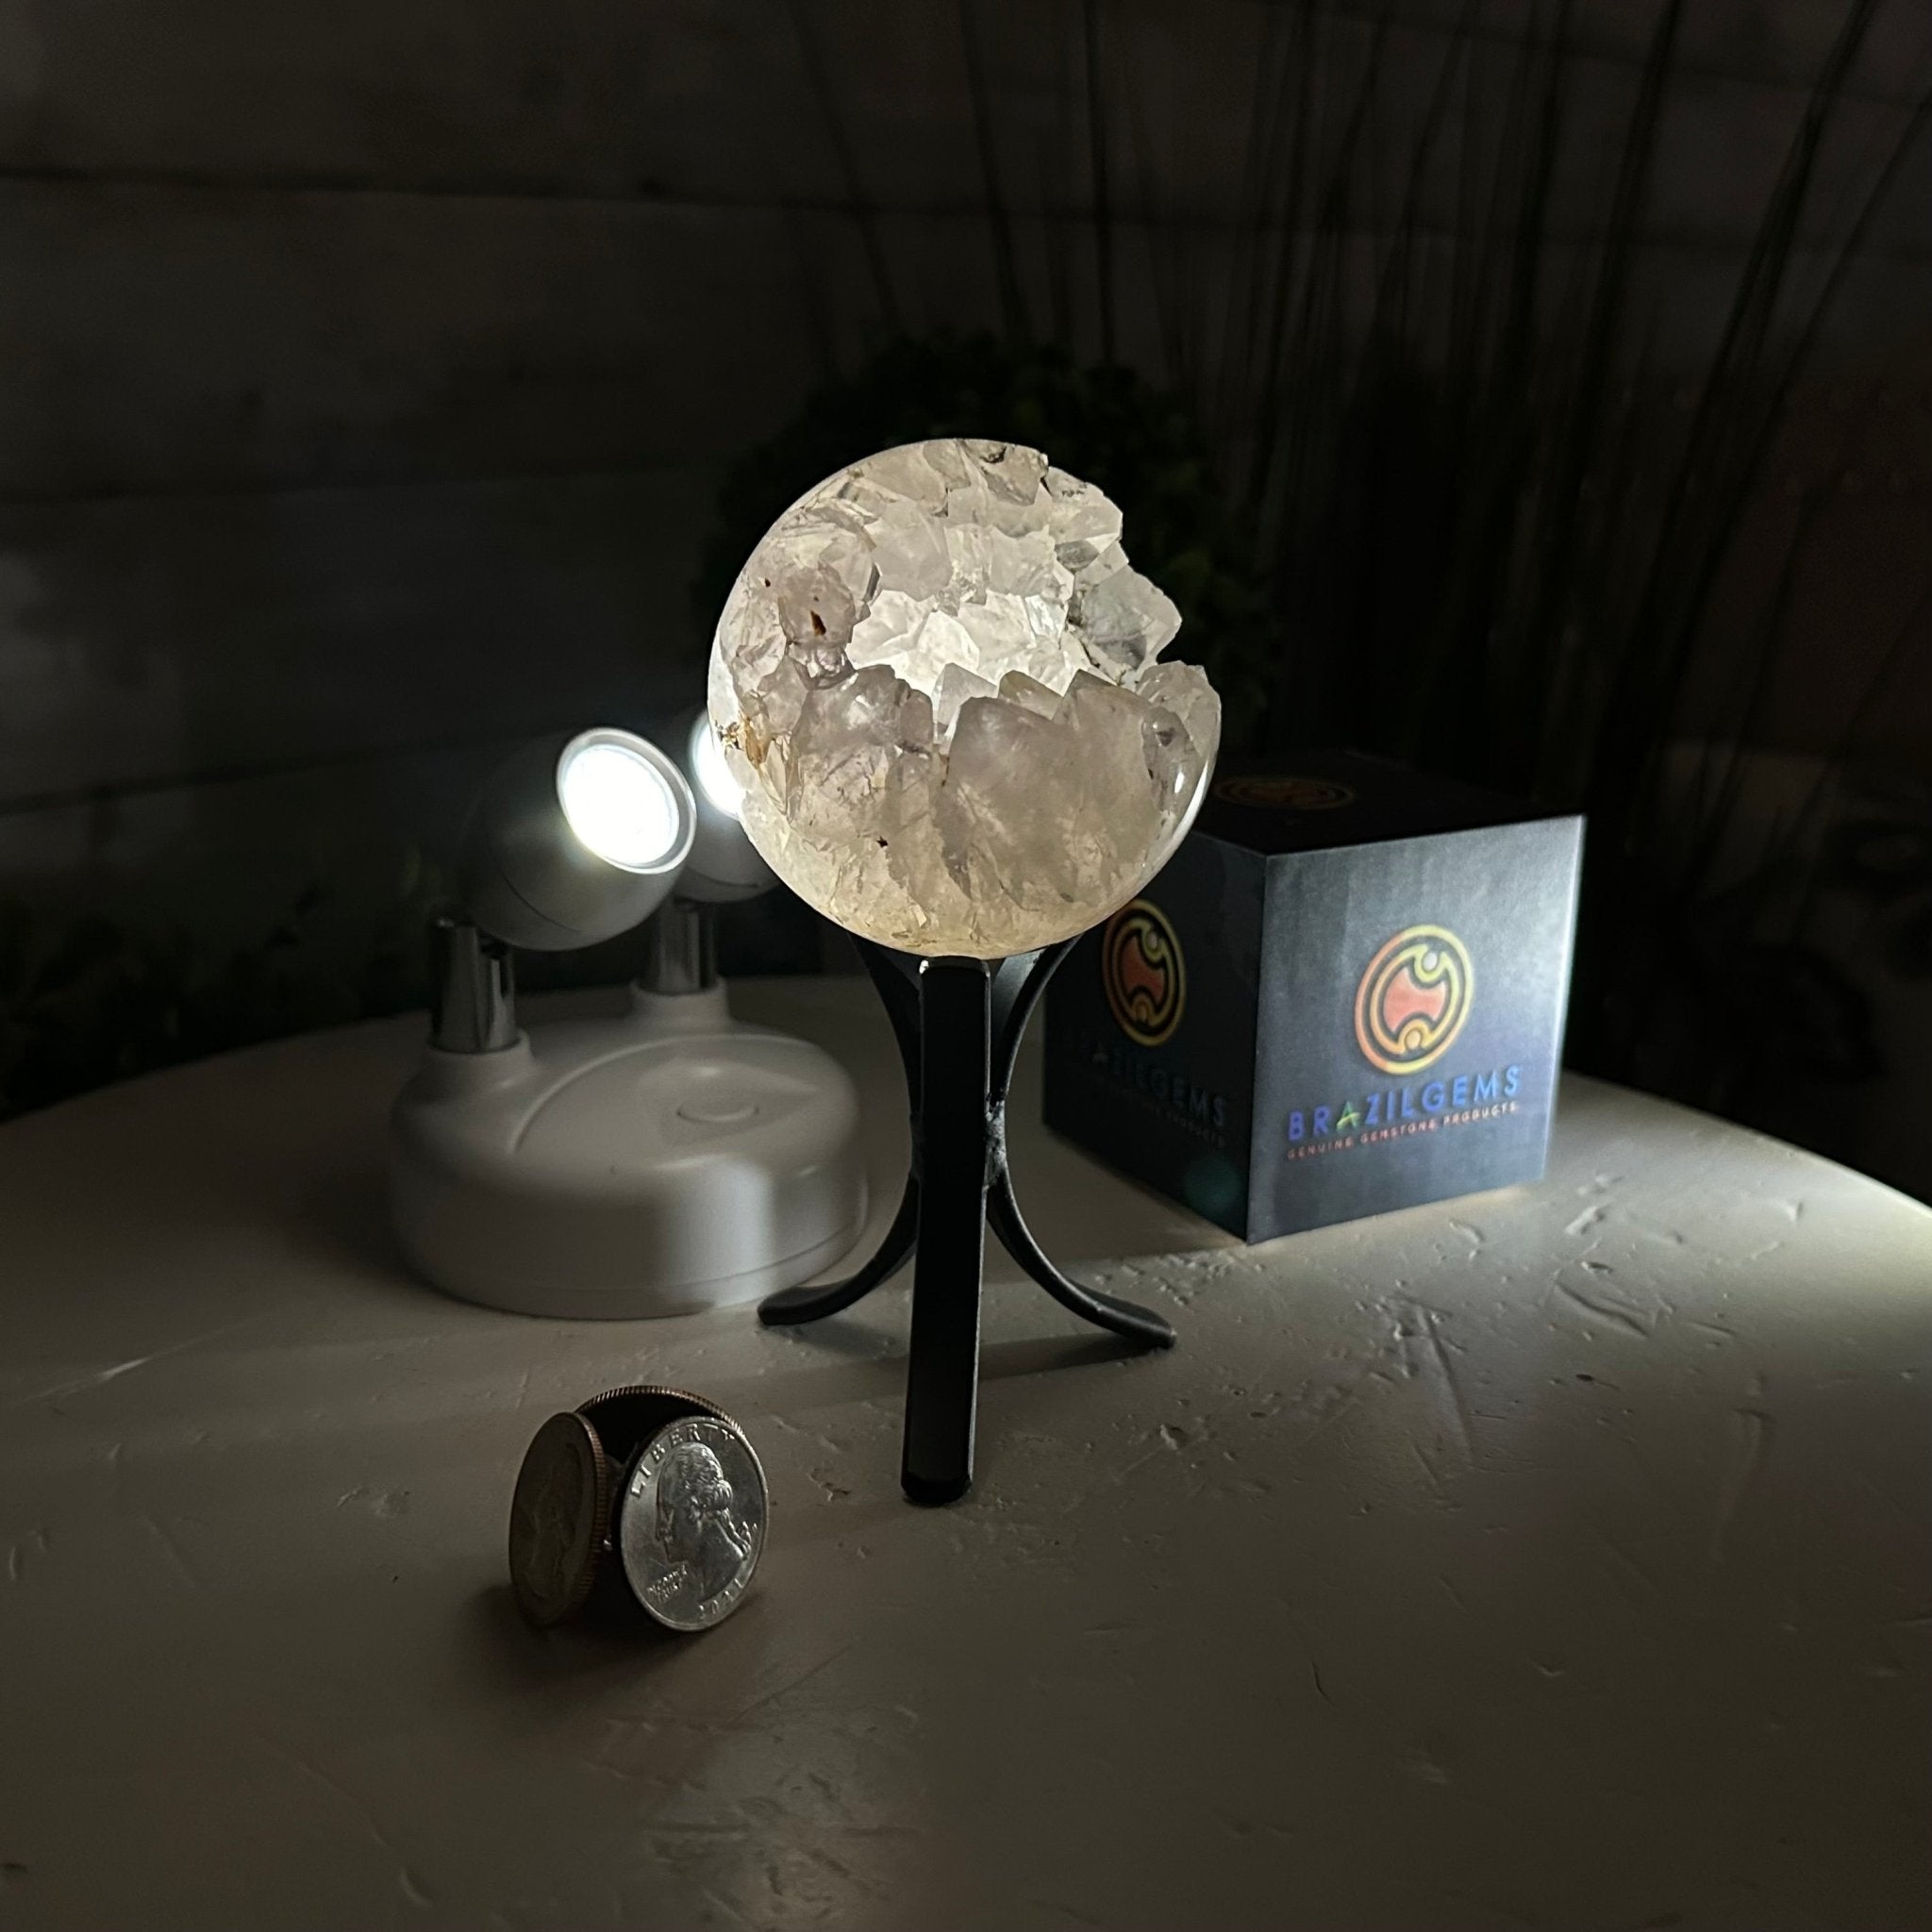 Druzy Amethyst Sphere on a Metal Stand, 0.7 lbs & 5.1" Tall #5630-0030 - Brazil GemsBrazil GemsDruzy Amethyst Sphere on a Metal Stand, 0.7 lbs & 5.1" Tall #5630-0030Spheres5630-0030